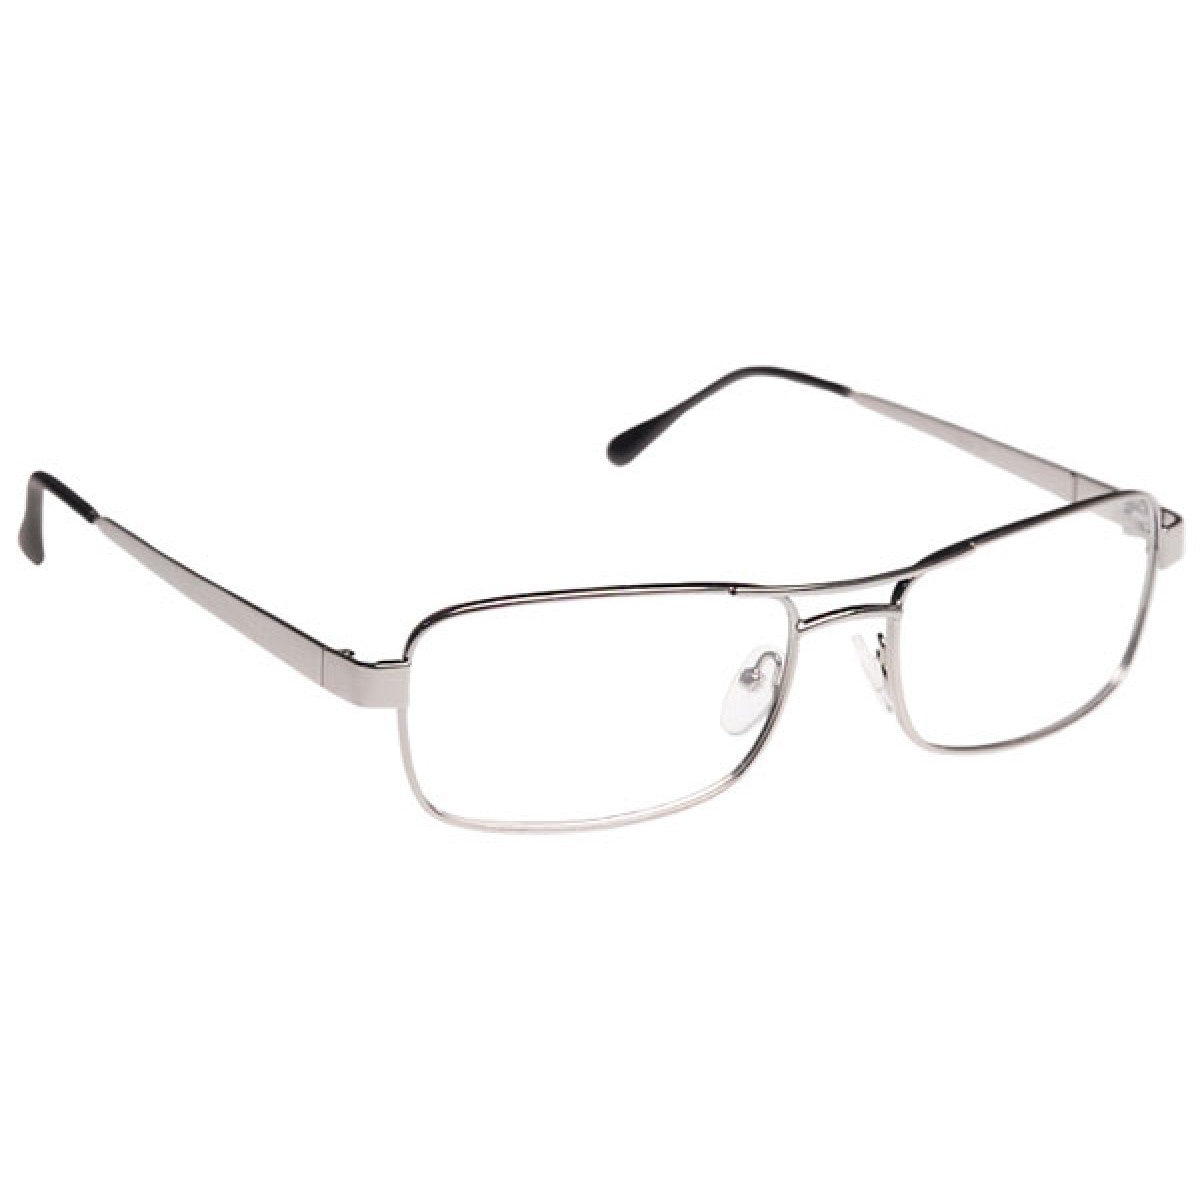 Armourx Prescription Safety Eyeglasses 7012